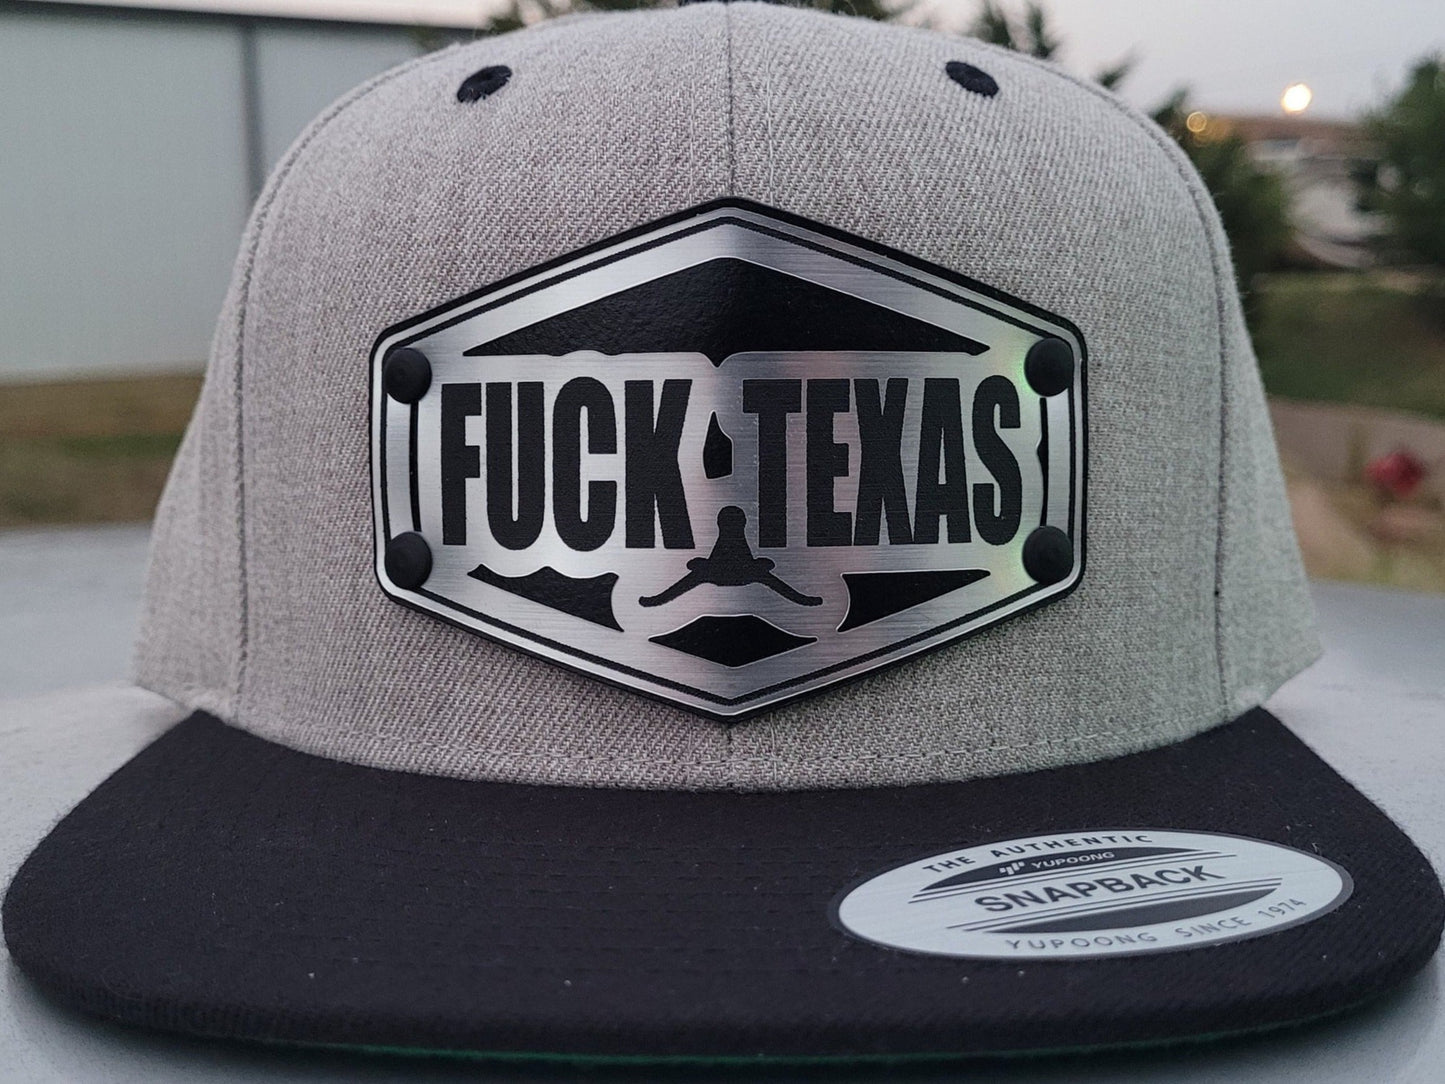 Fuck Texas hat